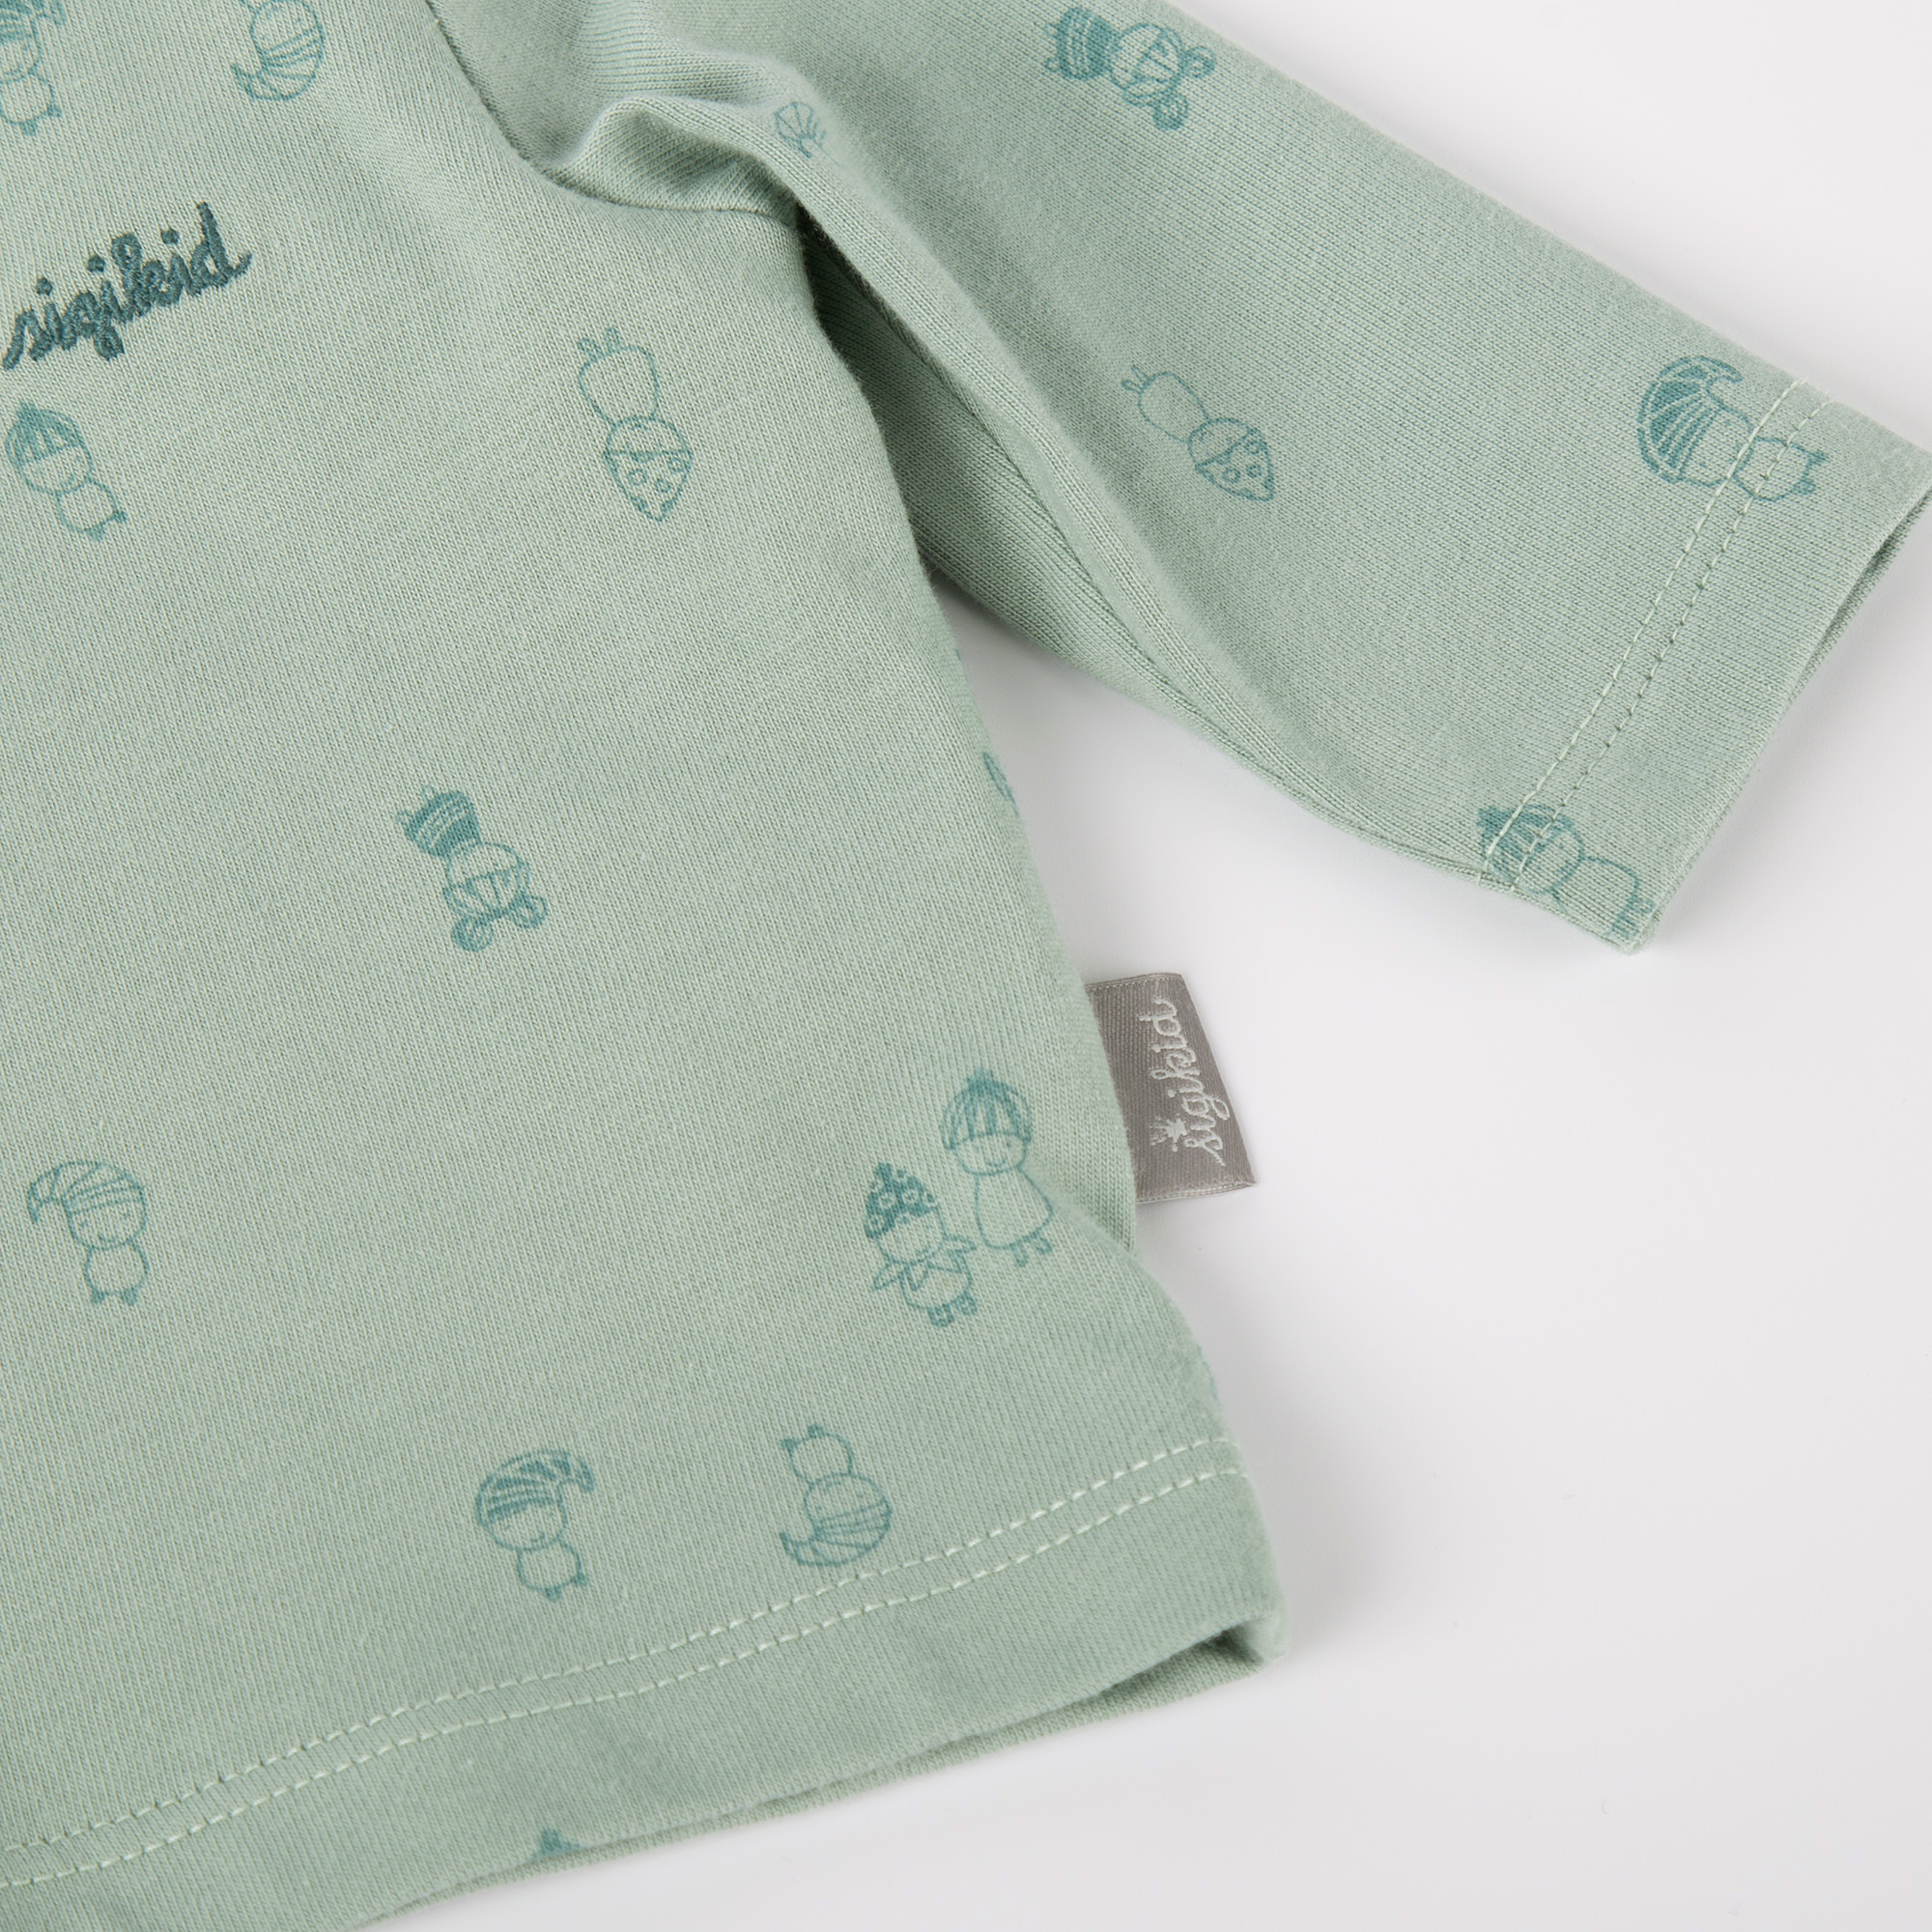 Newborn baby long sleeve Tee, mint green, print design